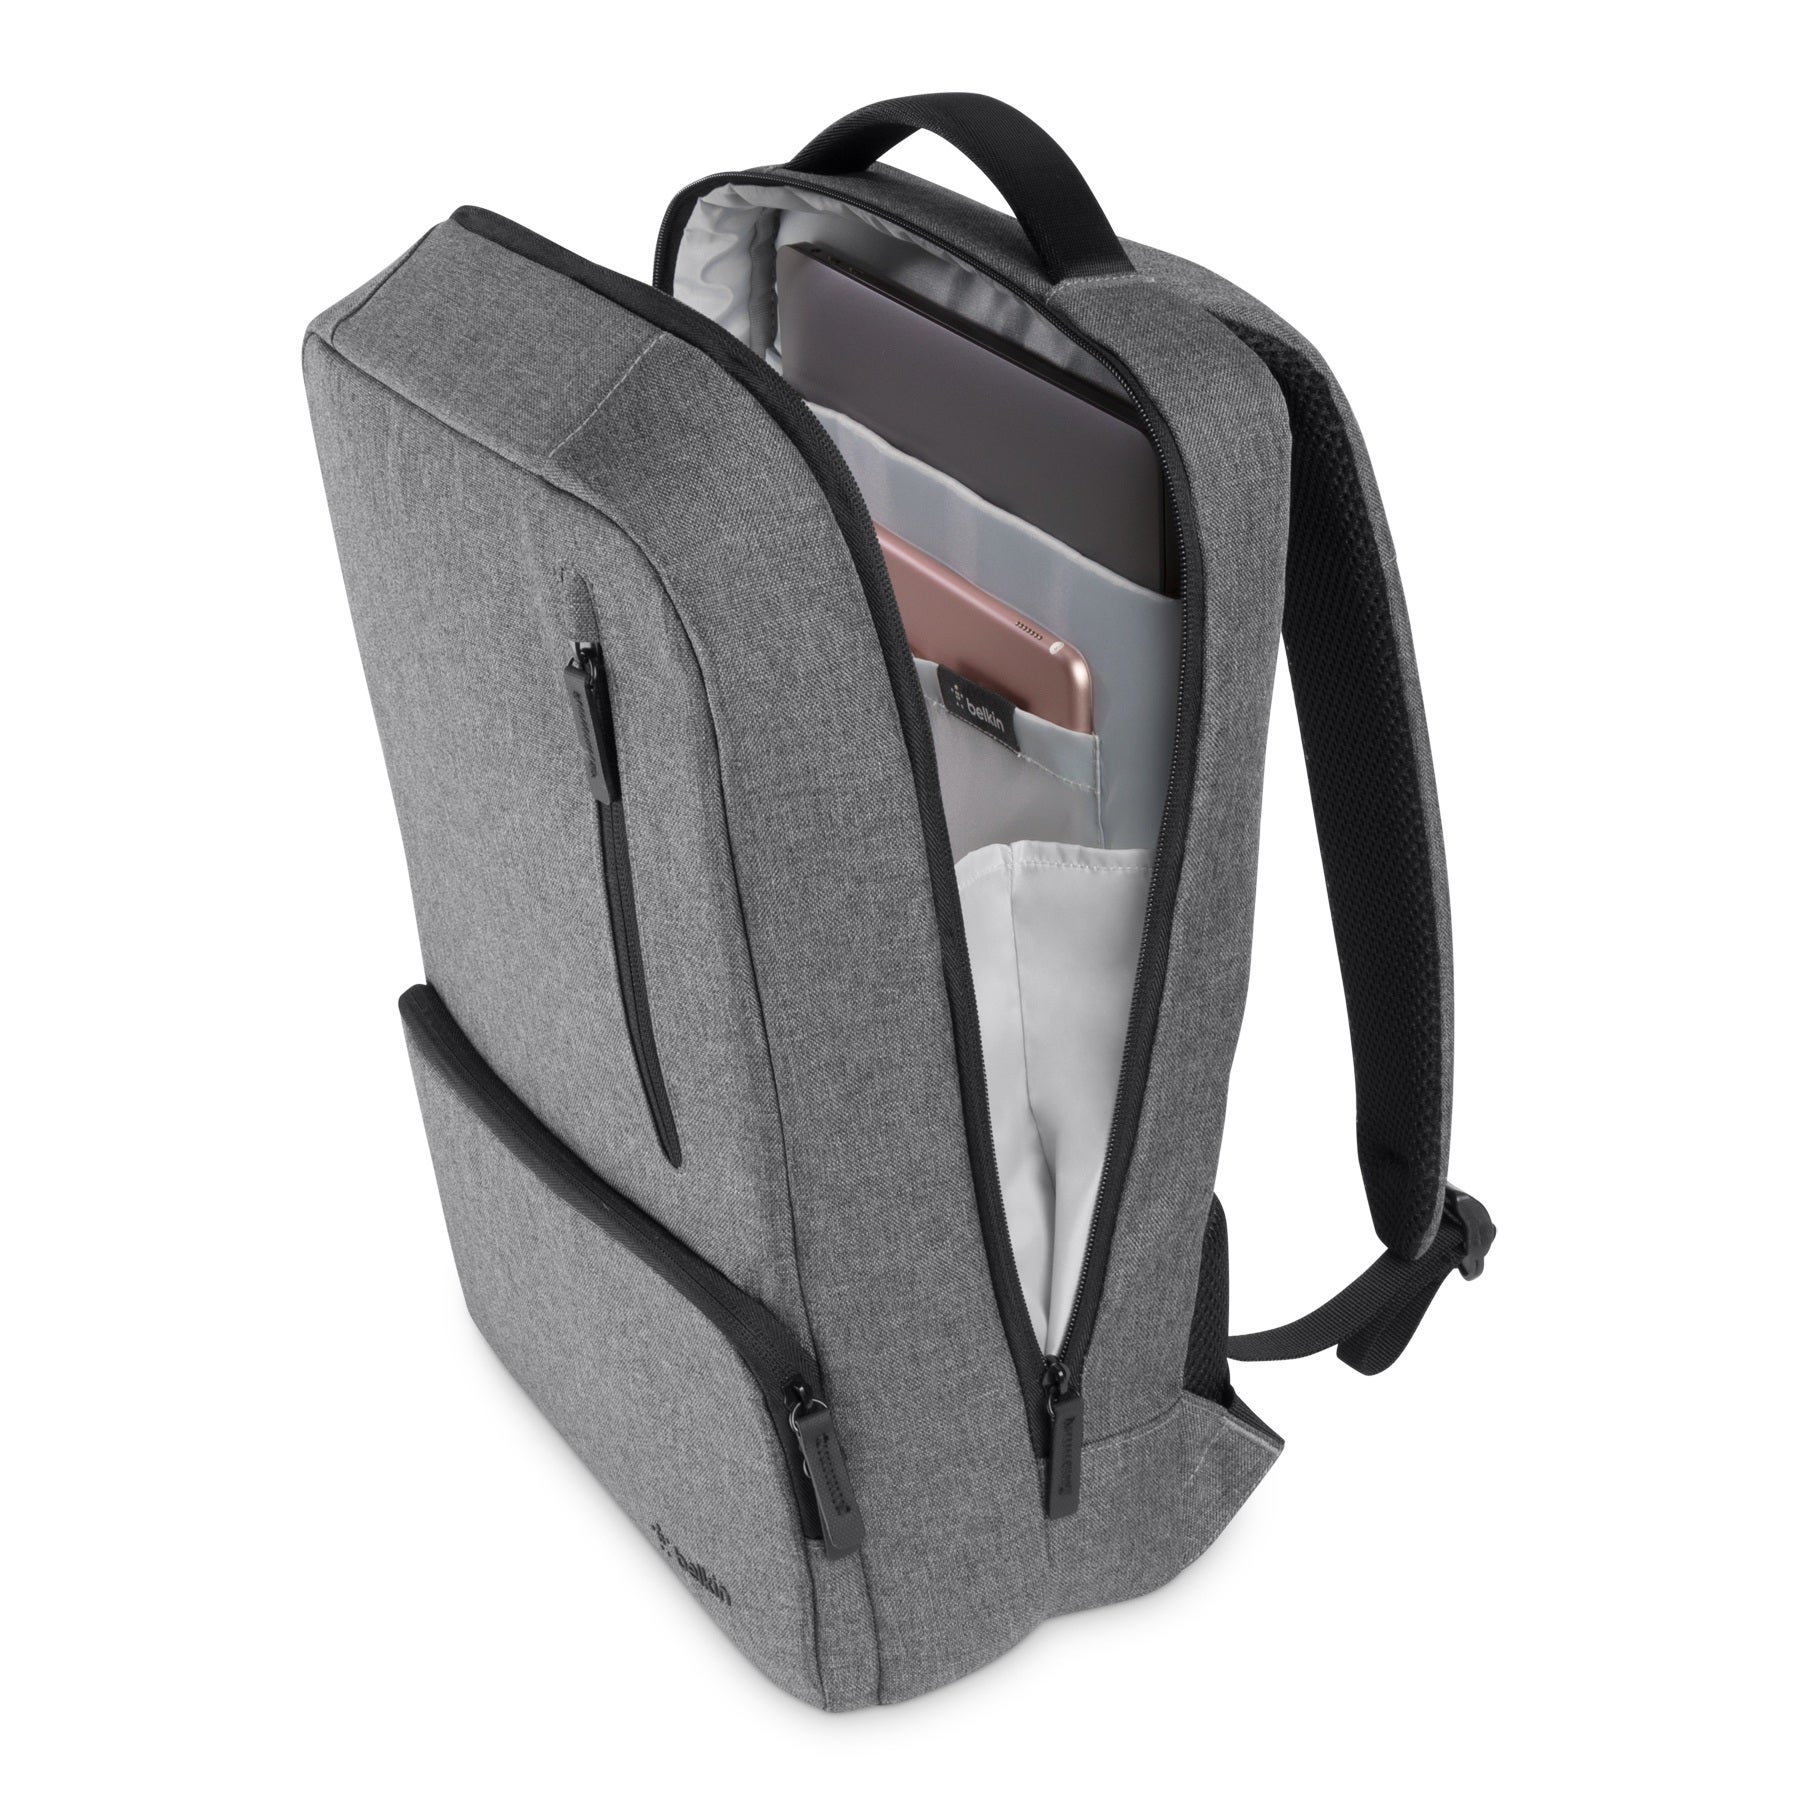 Belkin Notebook Bag Microfiber Case - F8N004 NE-07 : Amazon.in: Computers &  Accessories